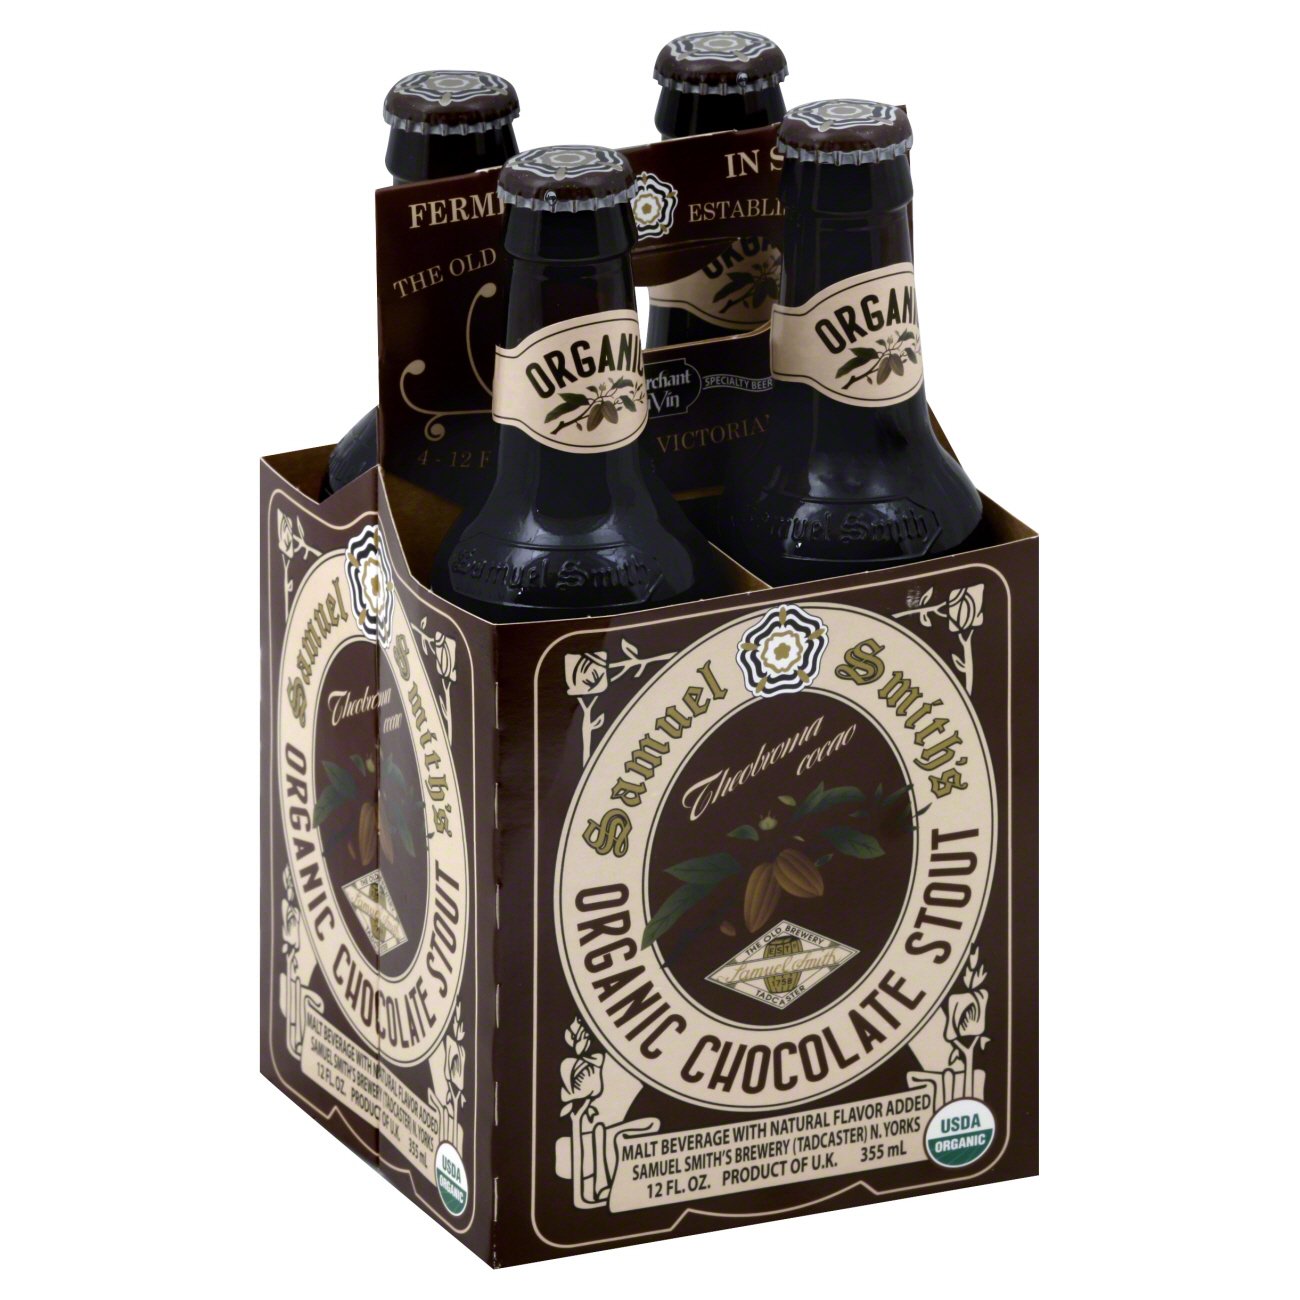 Samuel Smith Organic Chocolate Stout Beer 12 Oz Bottles Shop Beer At